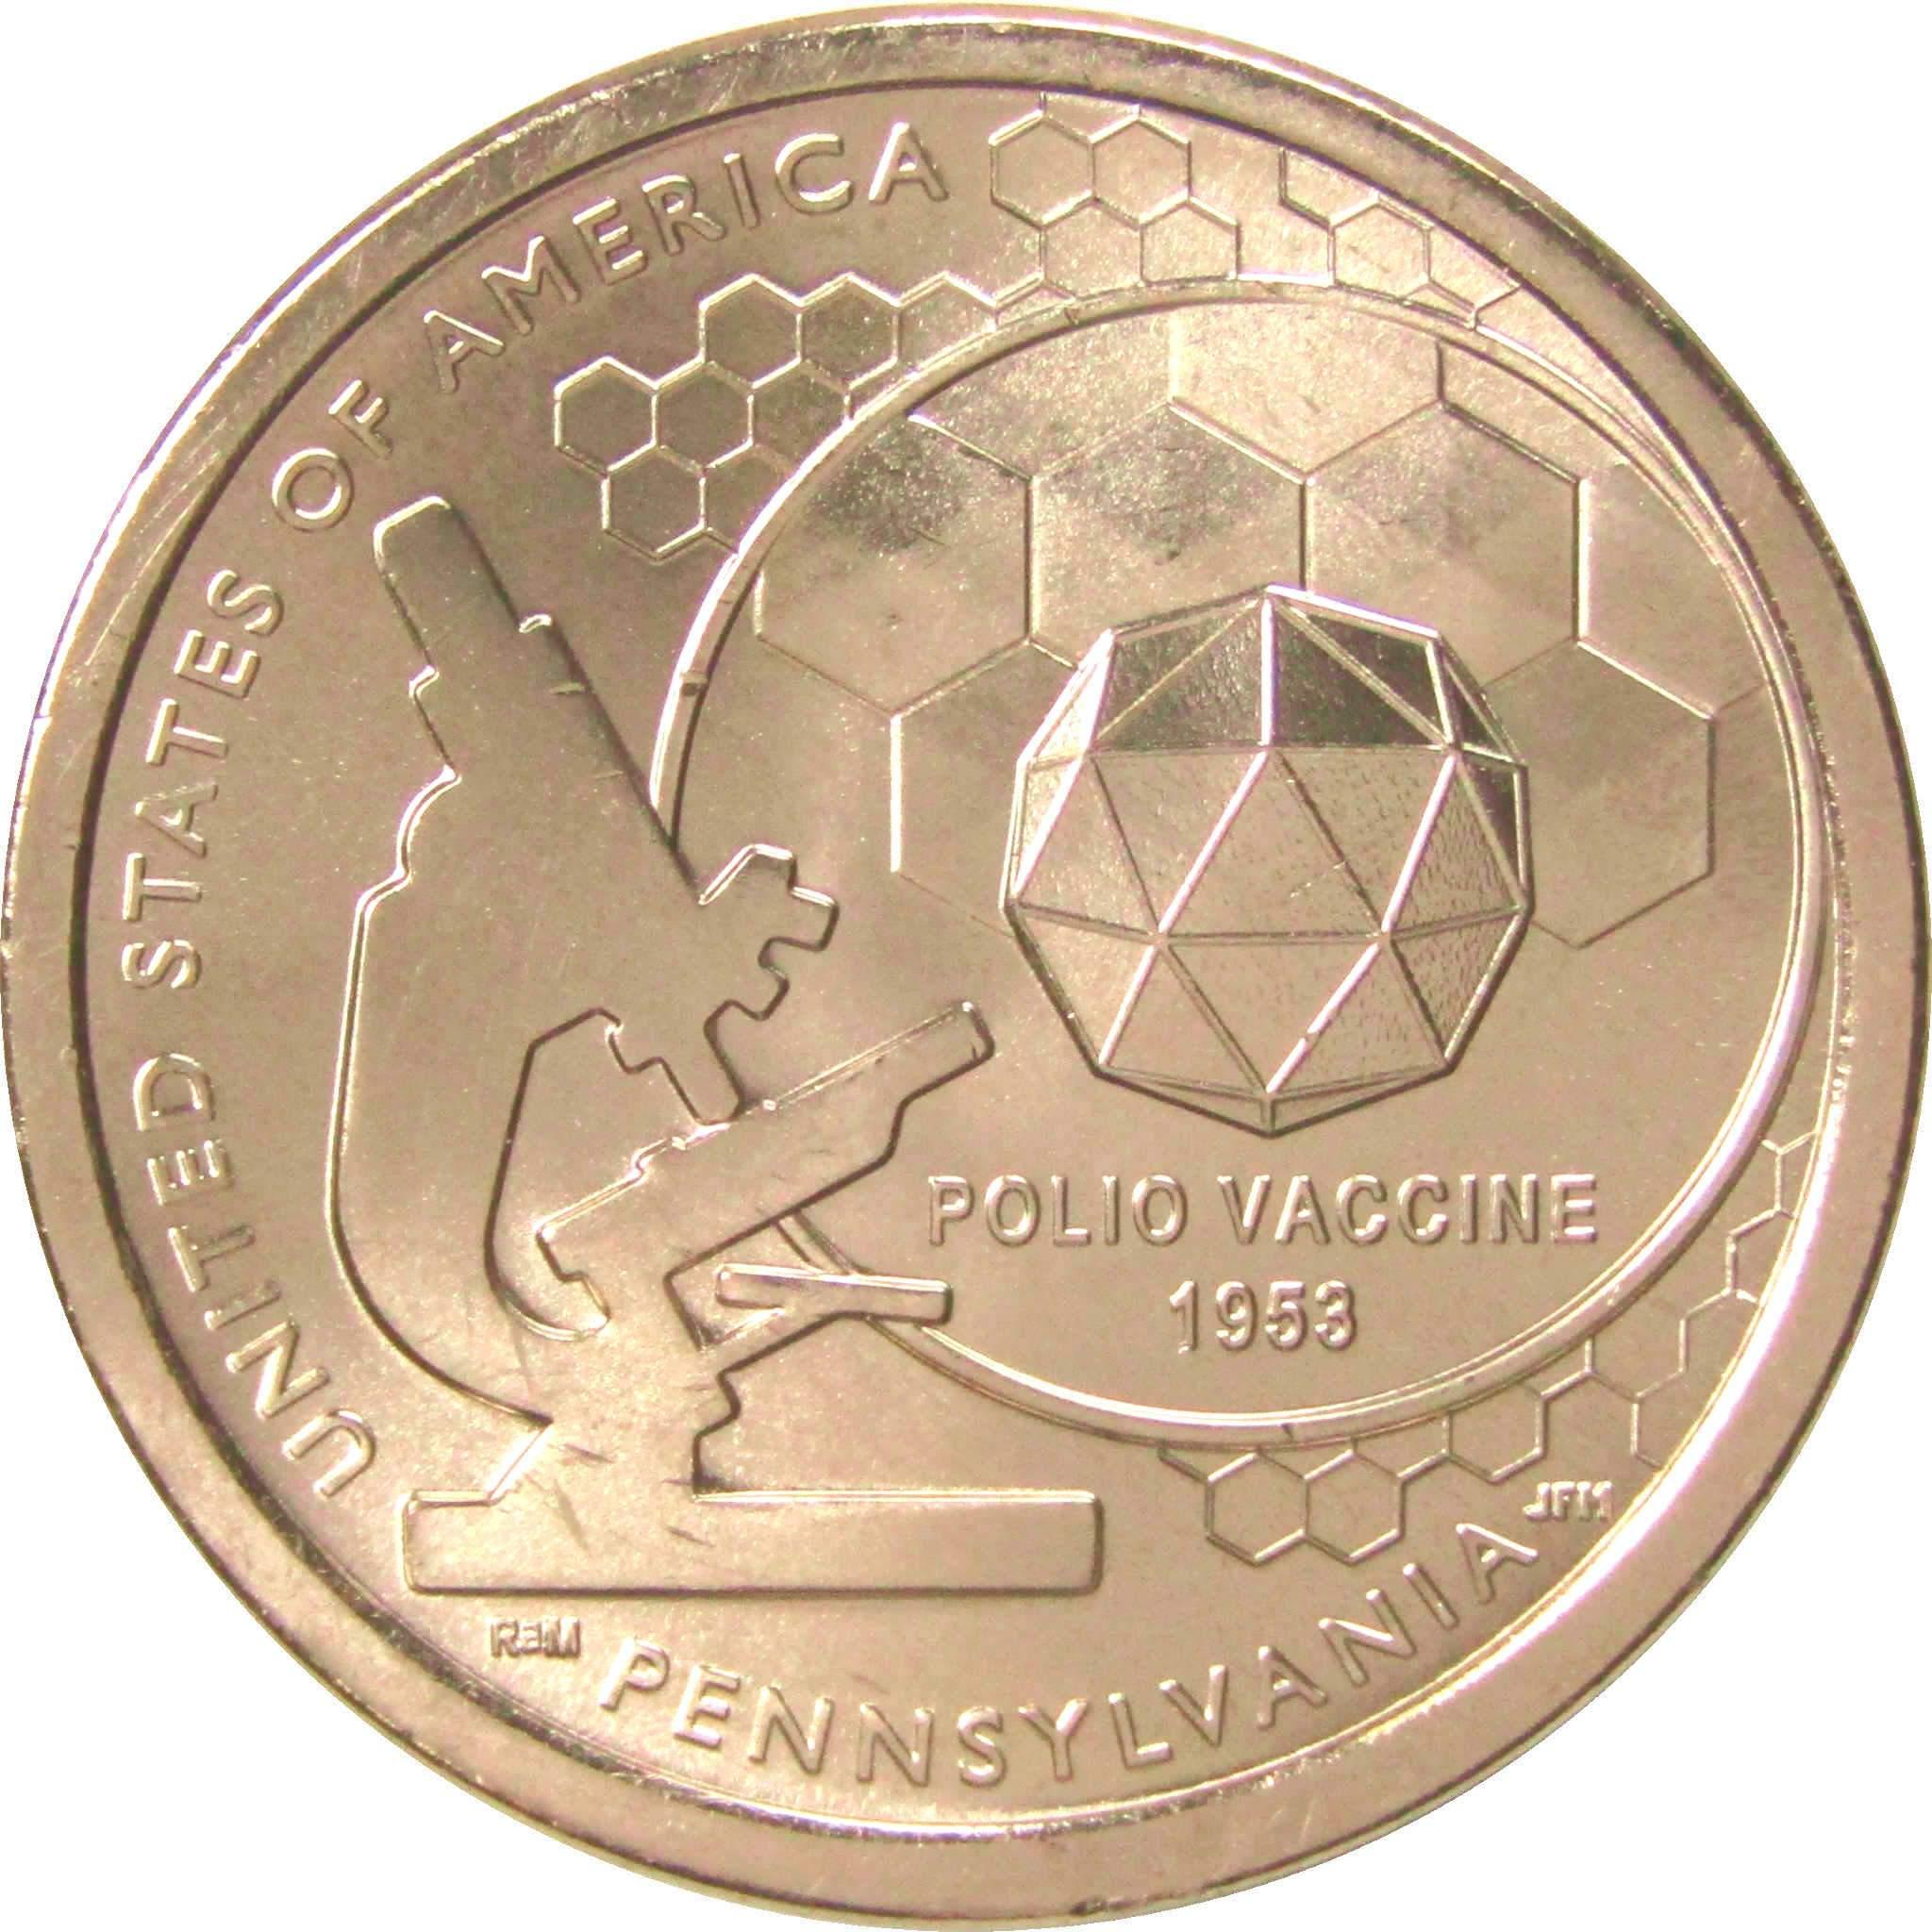 2019 P Pennsylvania American Innovation Dollar BU Uncirculated Mint State Coin